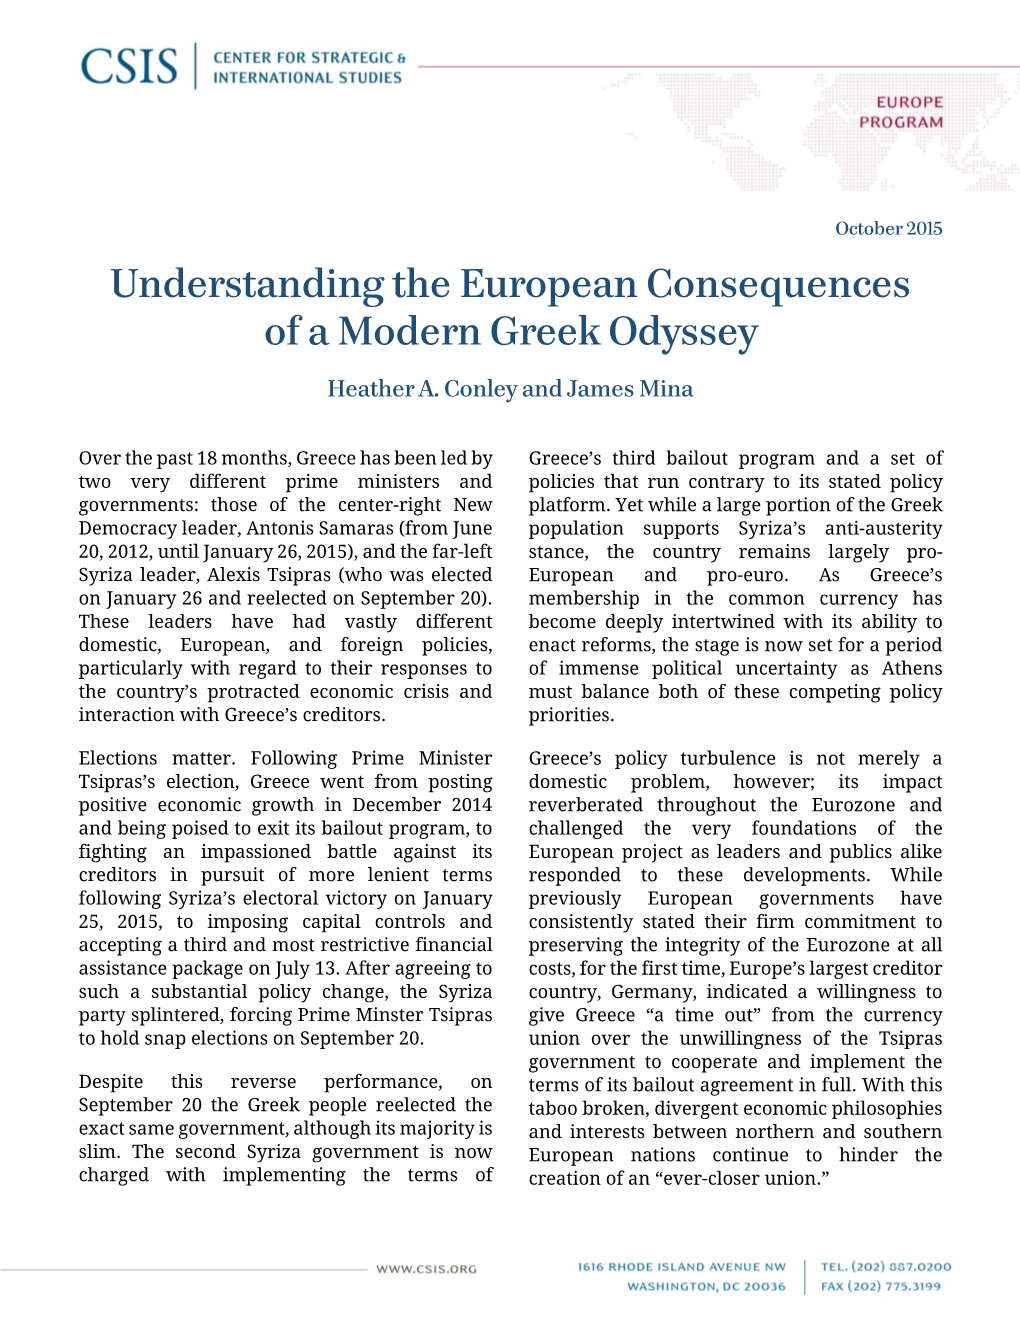 Understanding the European Consequences of a Modern Greek Odyssey